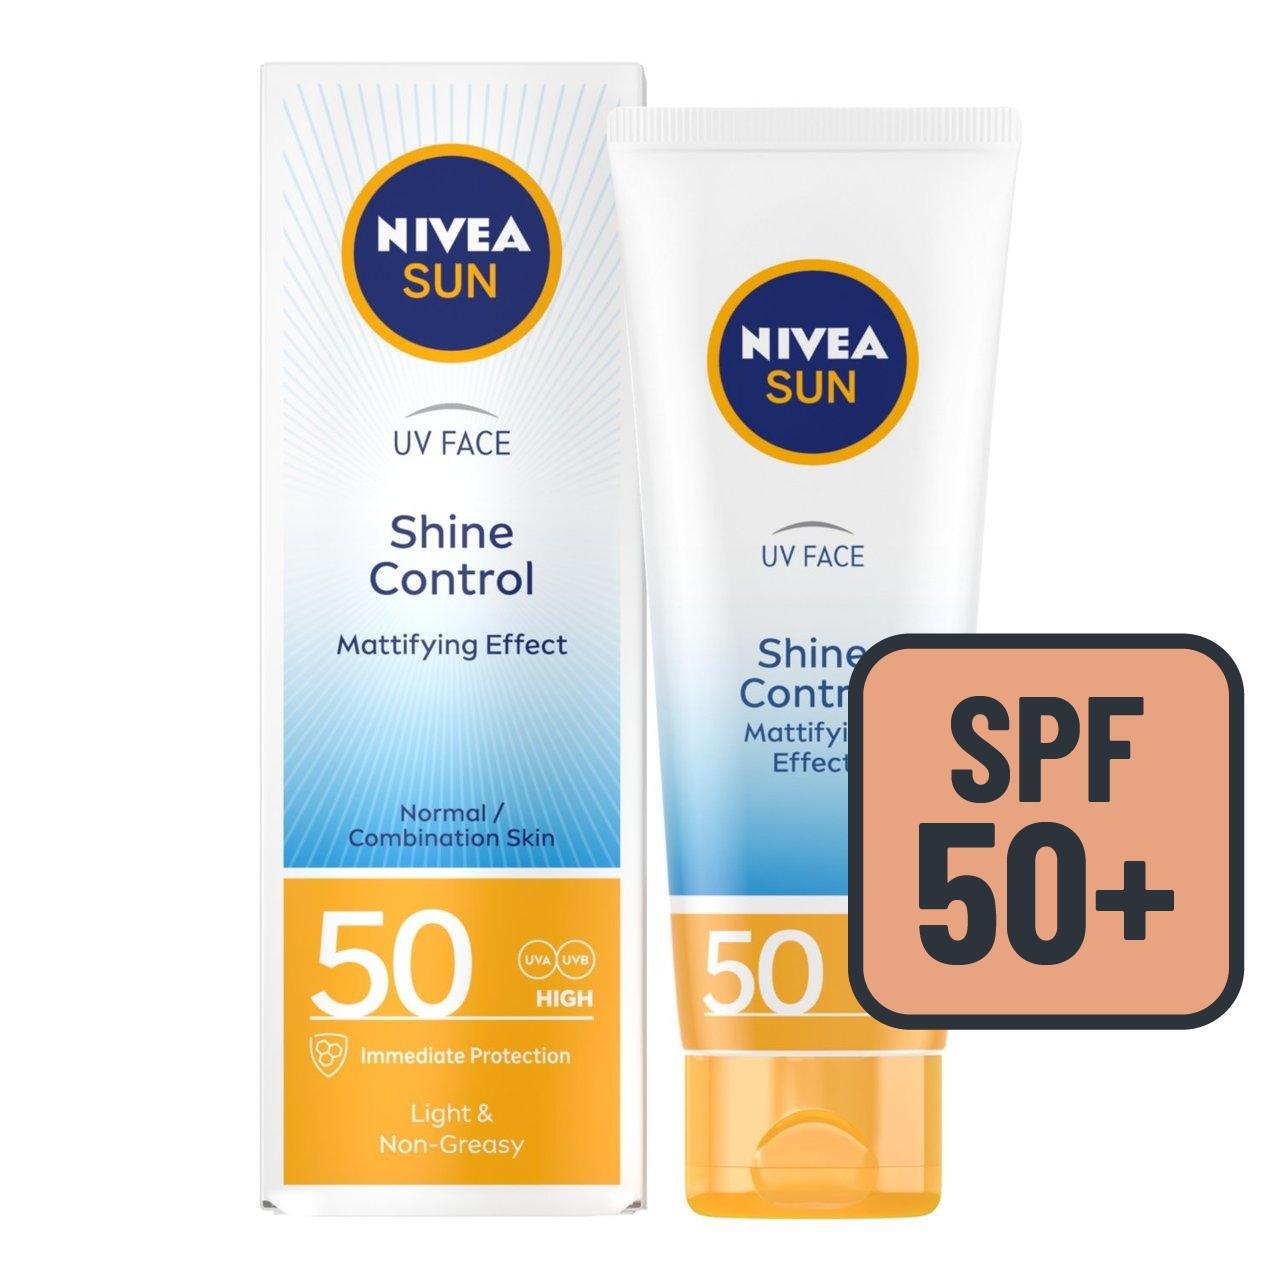 NIVEA SUN UV Face Shine Control SPF50 Sun Cream 50ml